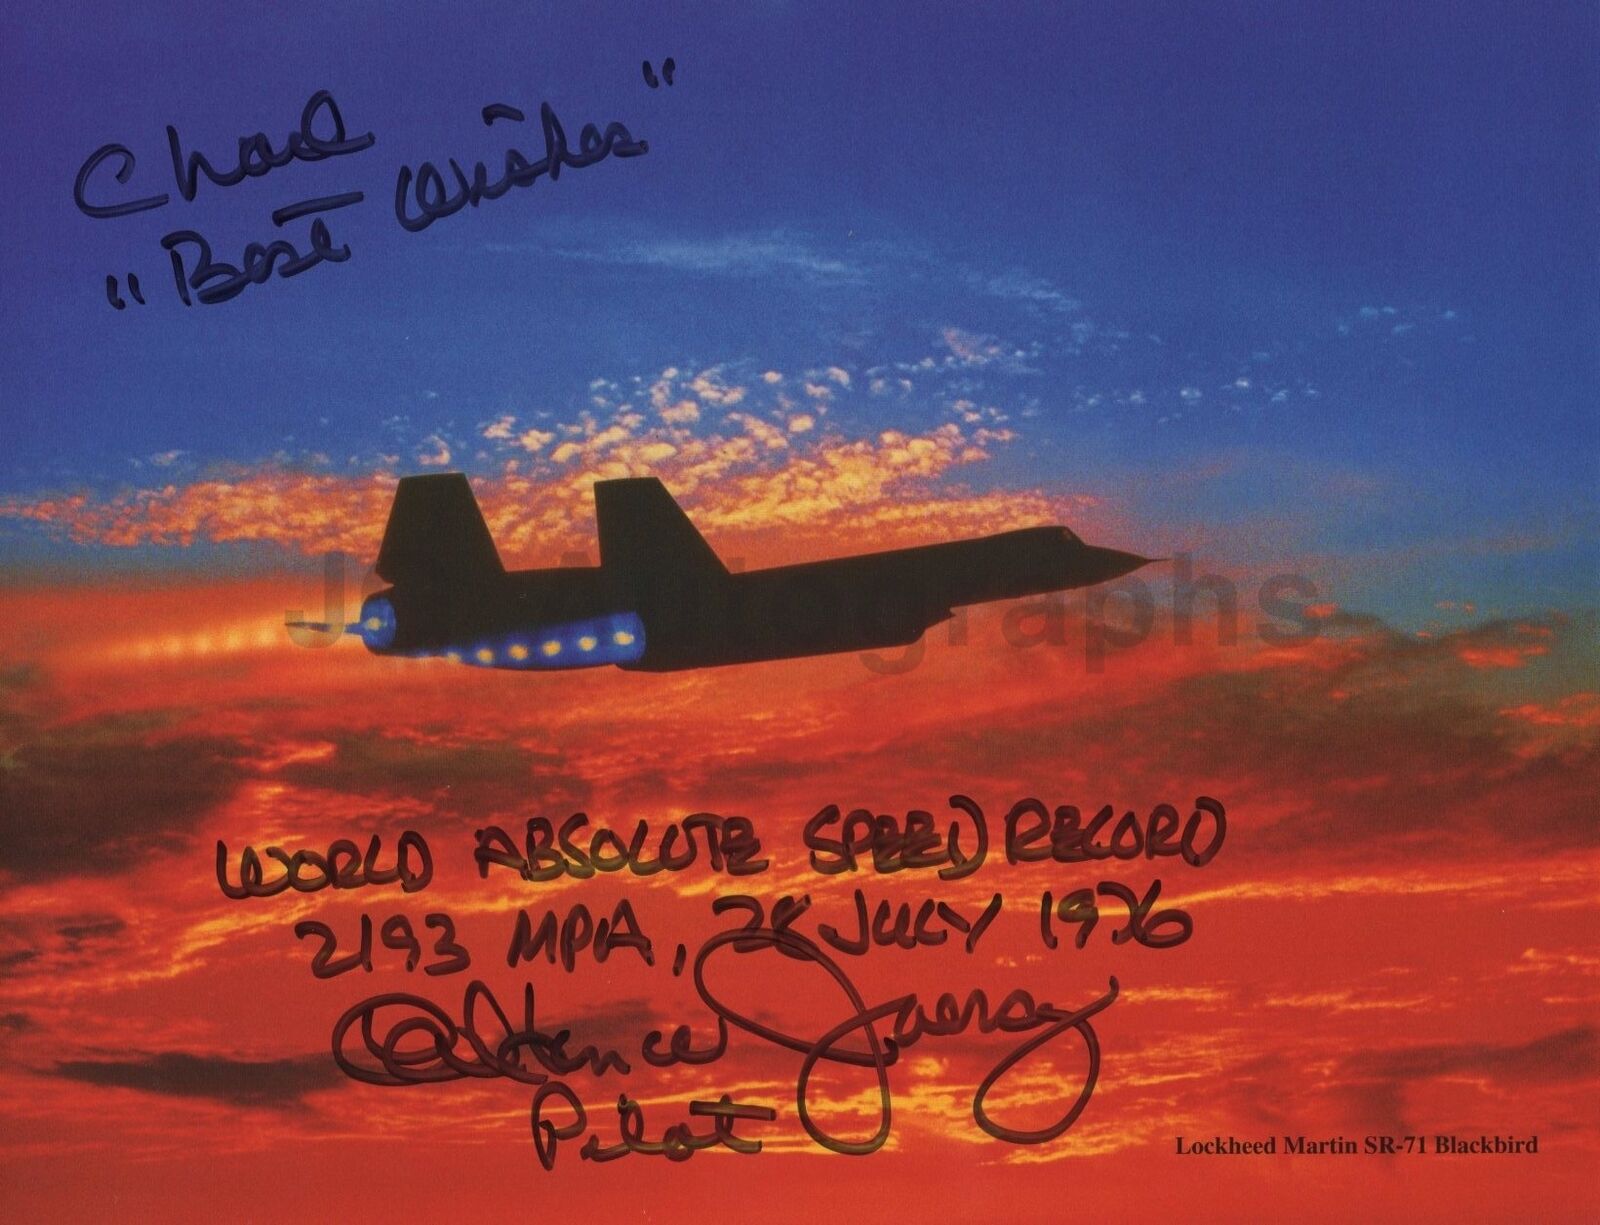 Eldon W. Joersz - World Air Speed Record Pilot - Signed 8.5 x 11 Photograph